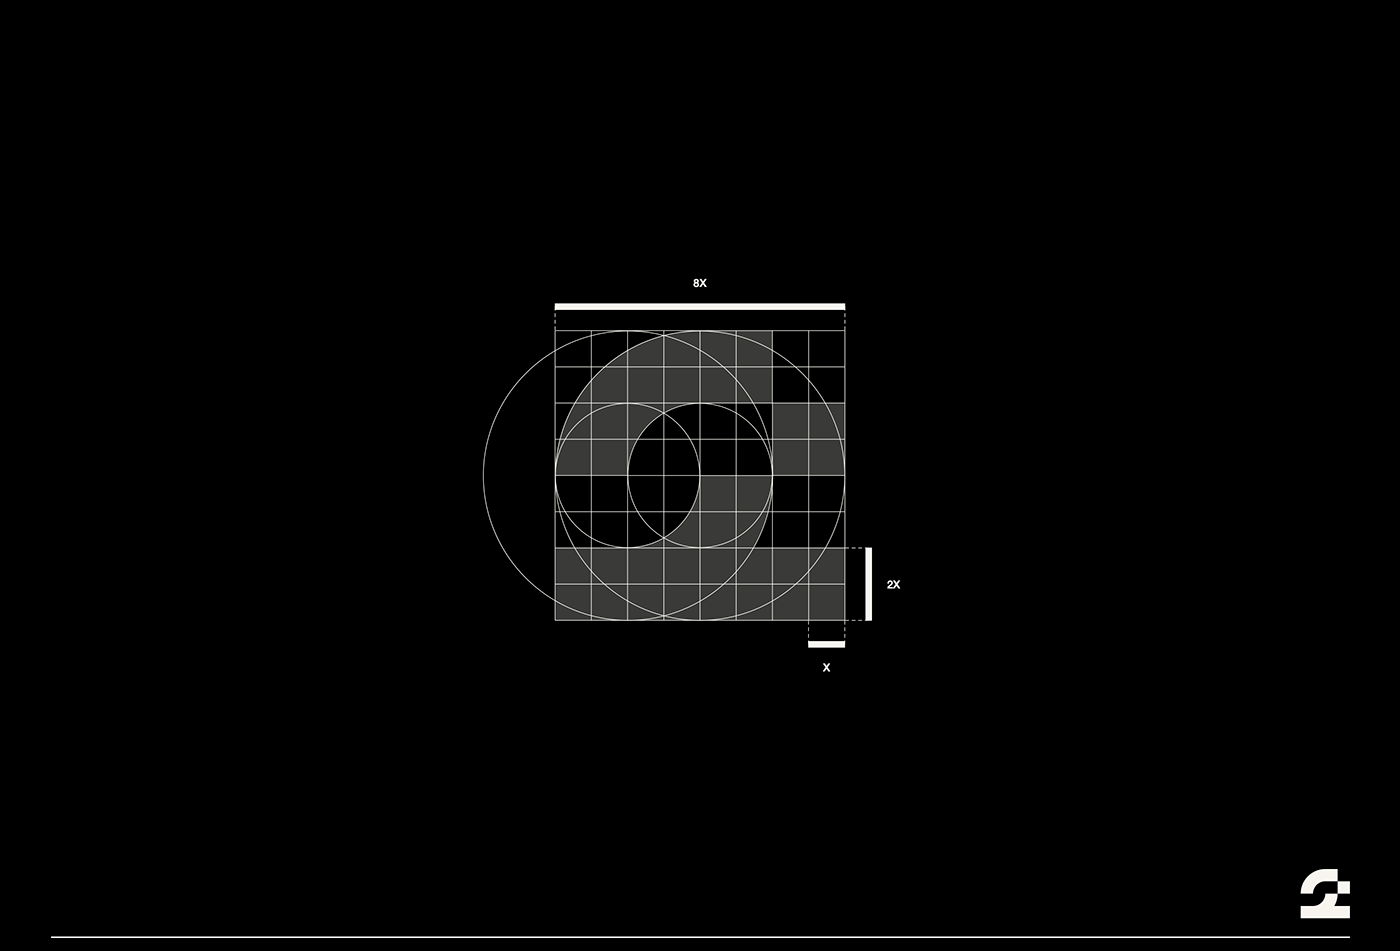 36 days of type geometric logo modern typography   grid poster Layout 36daysoftype type